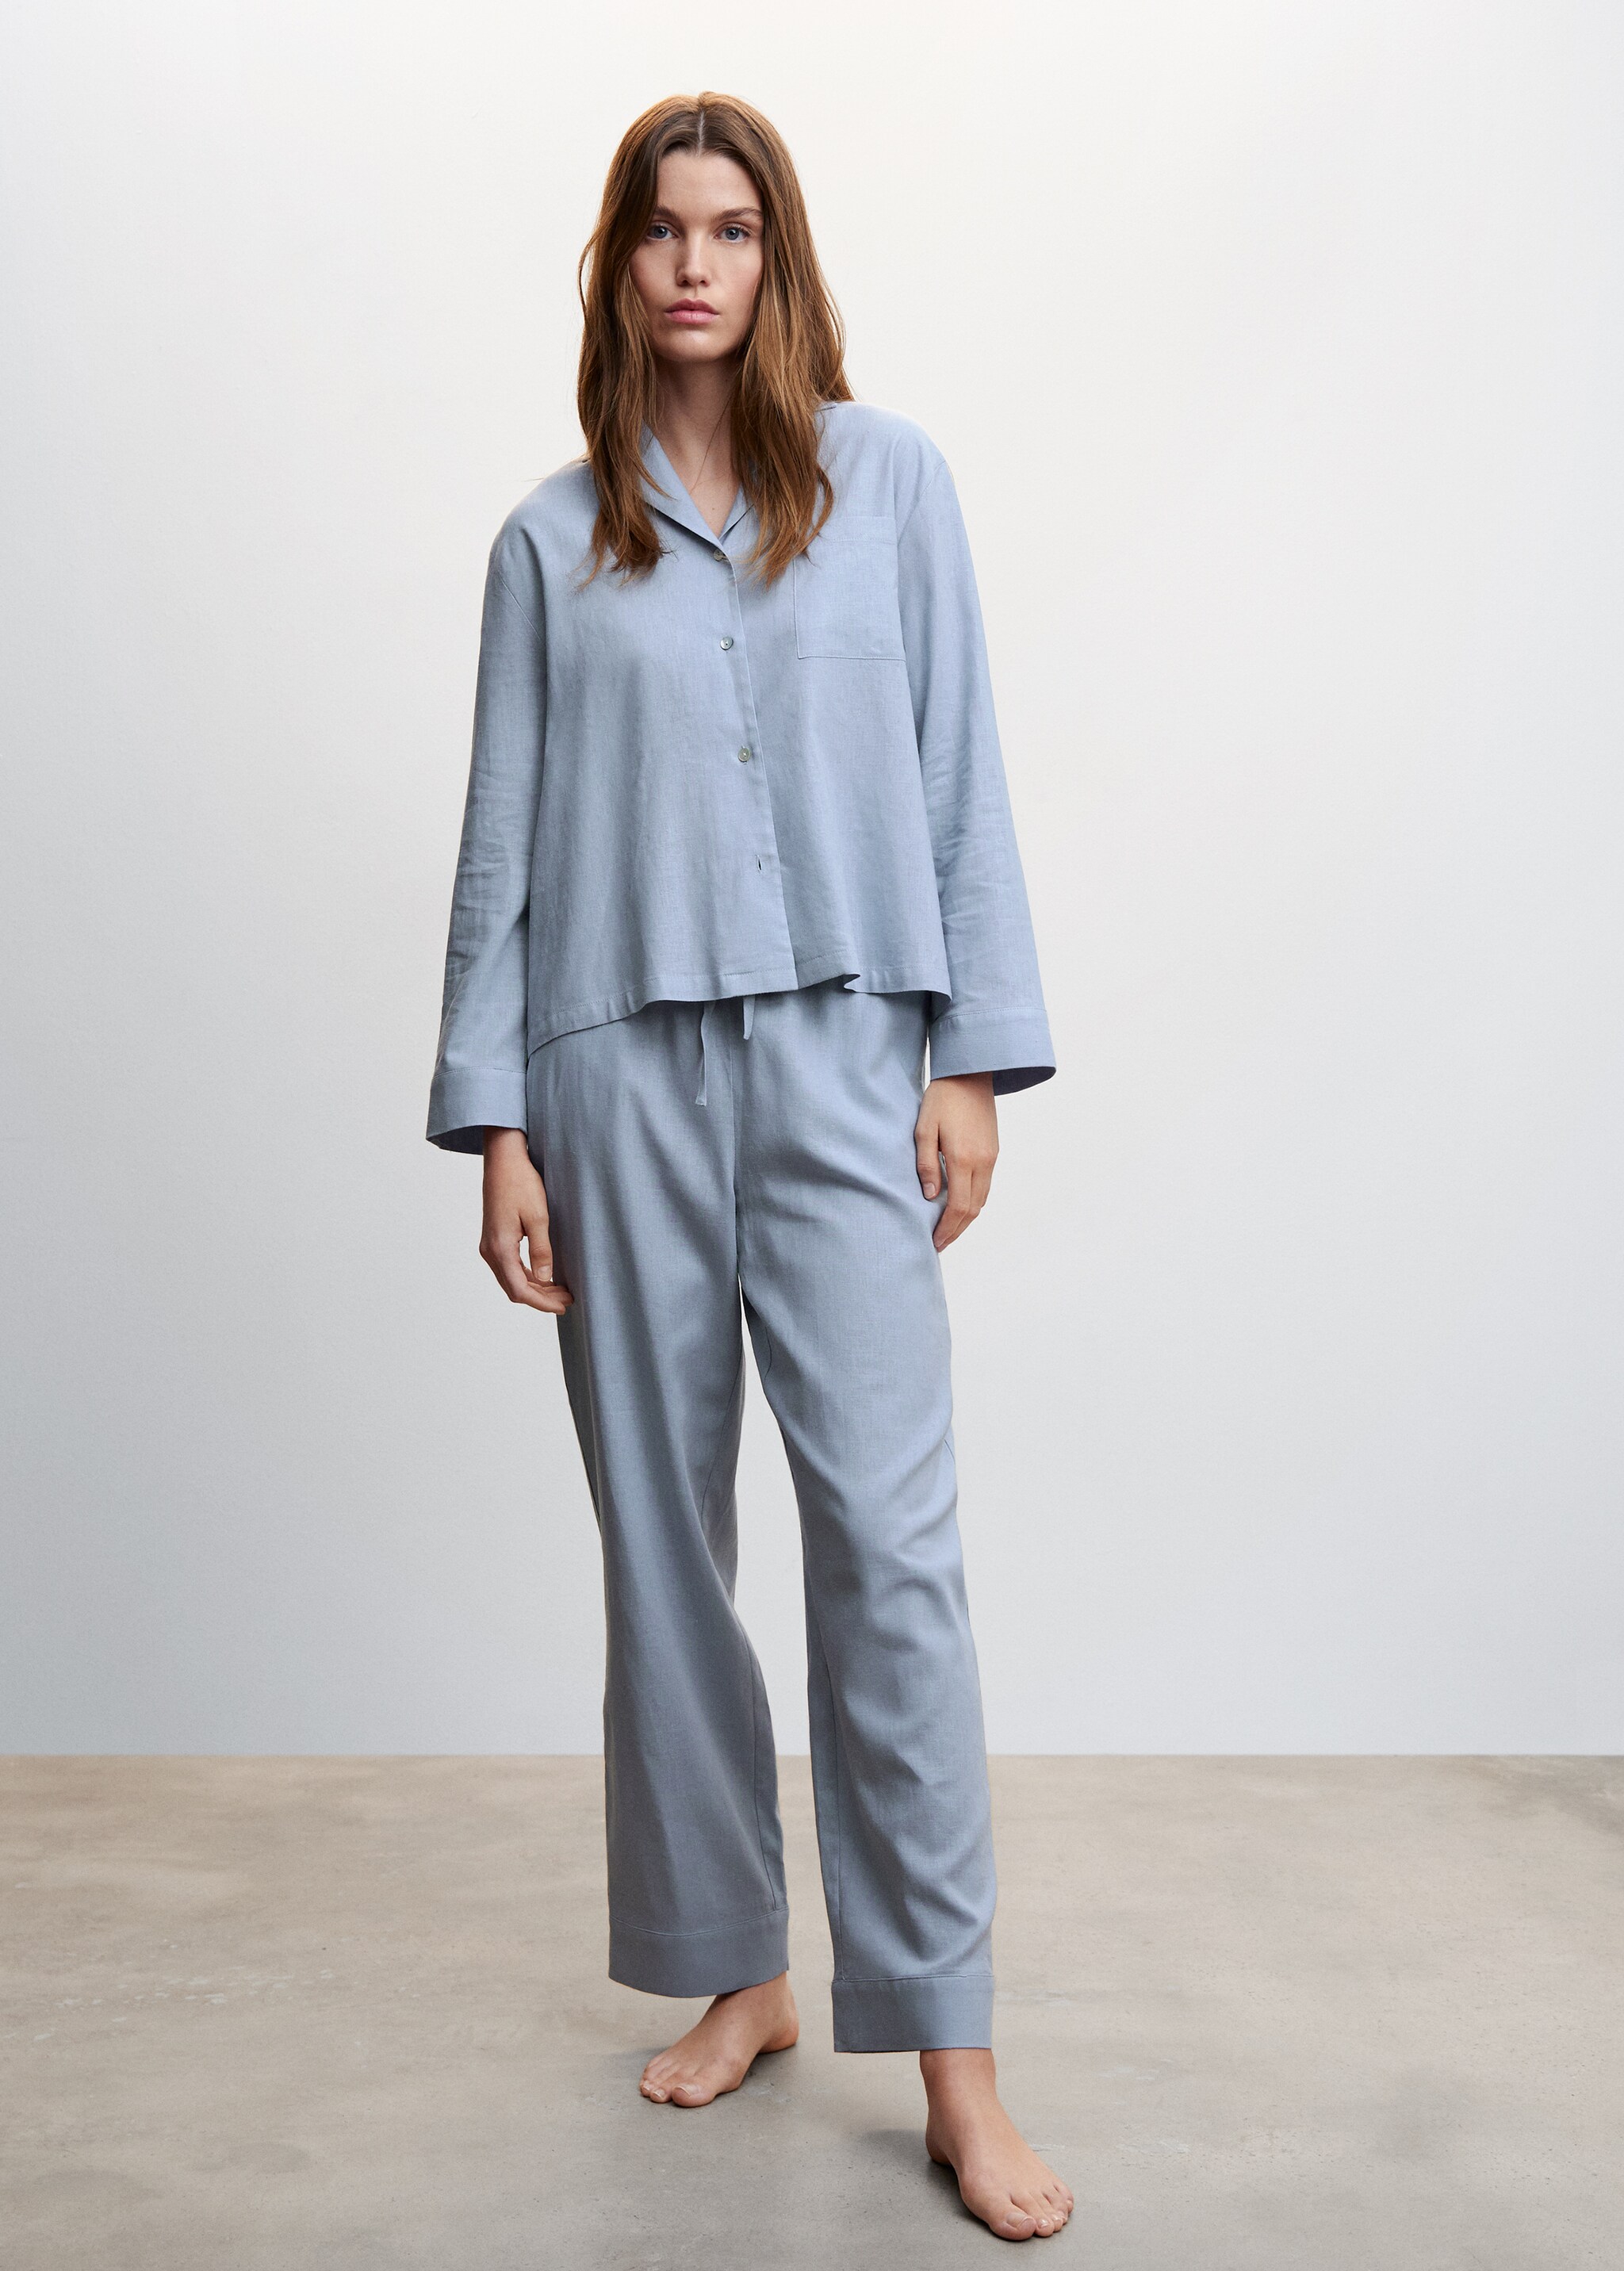 Linen pyjama shirt - General plane